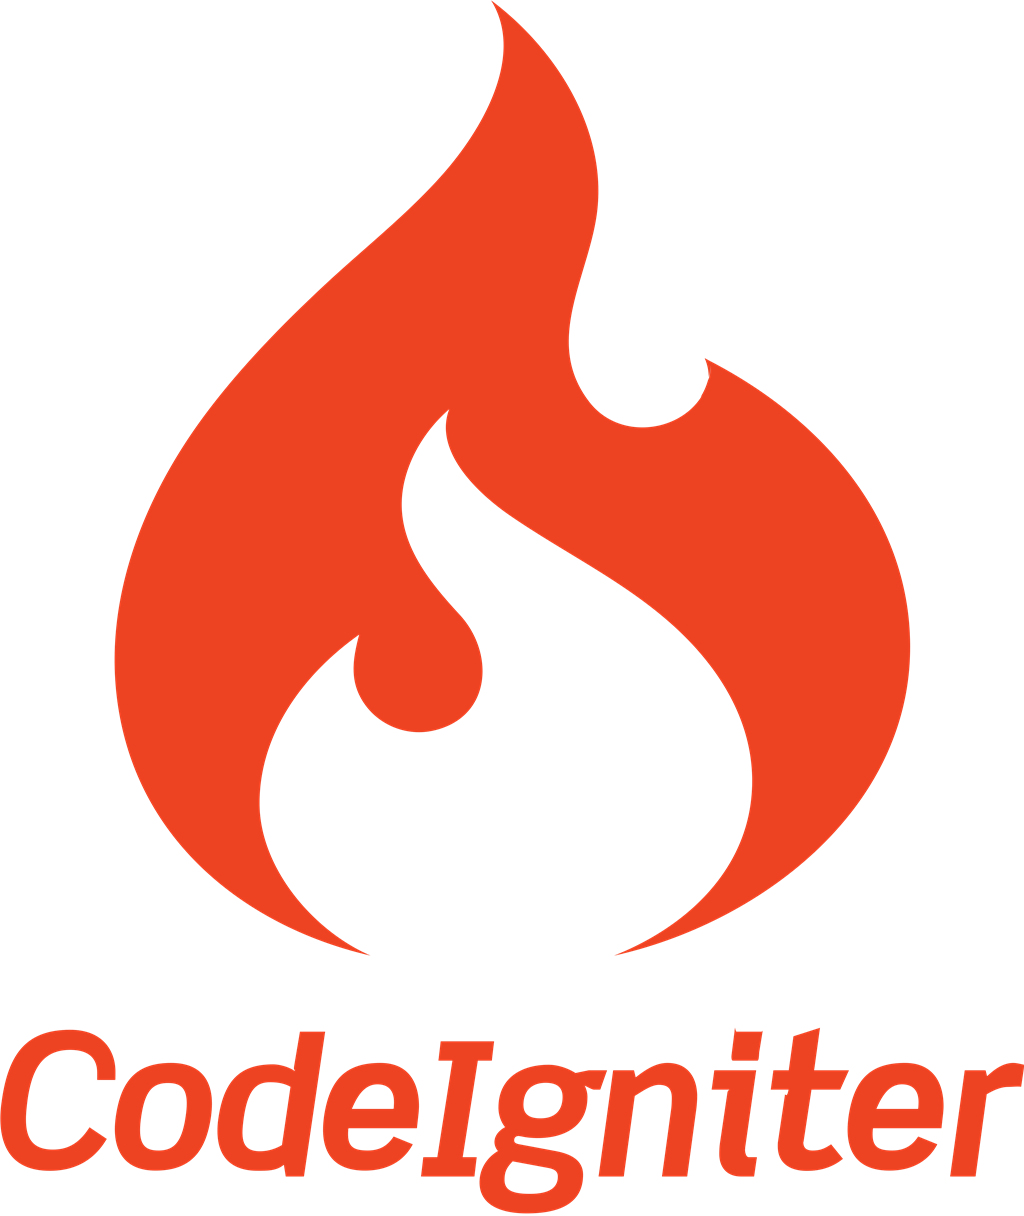 CodeIgniter logotype, transparent .png, medium, large